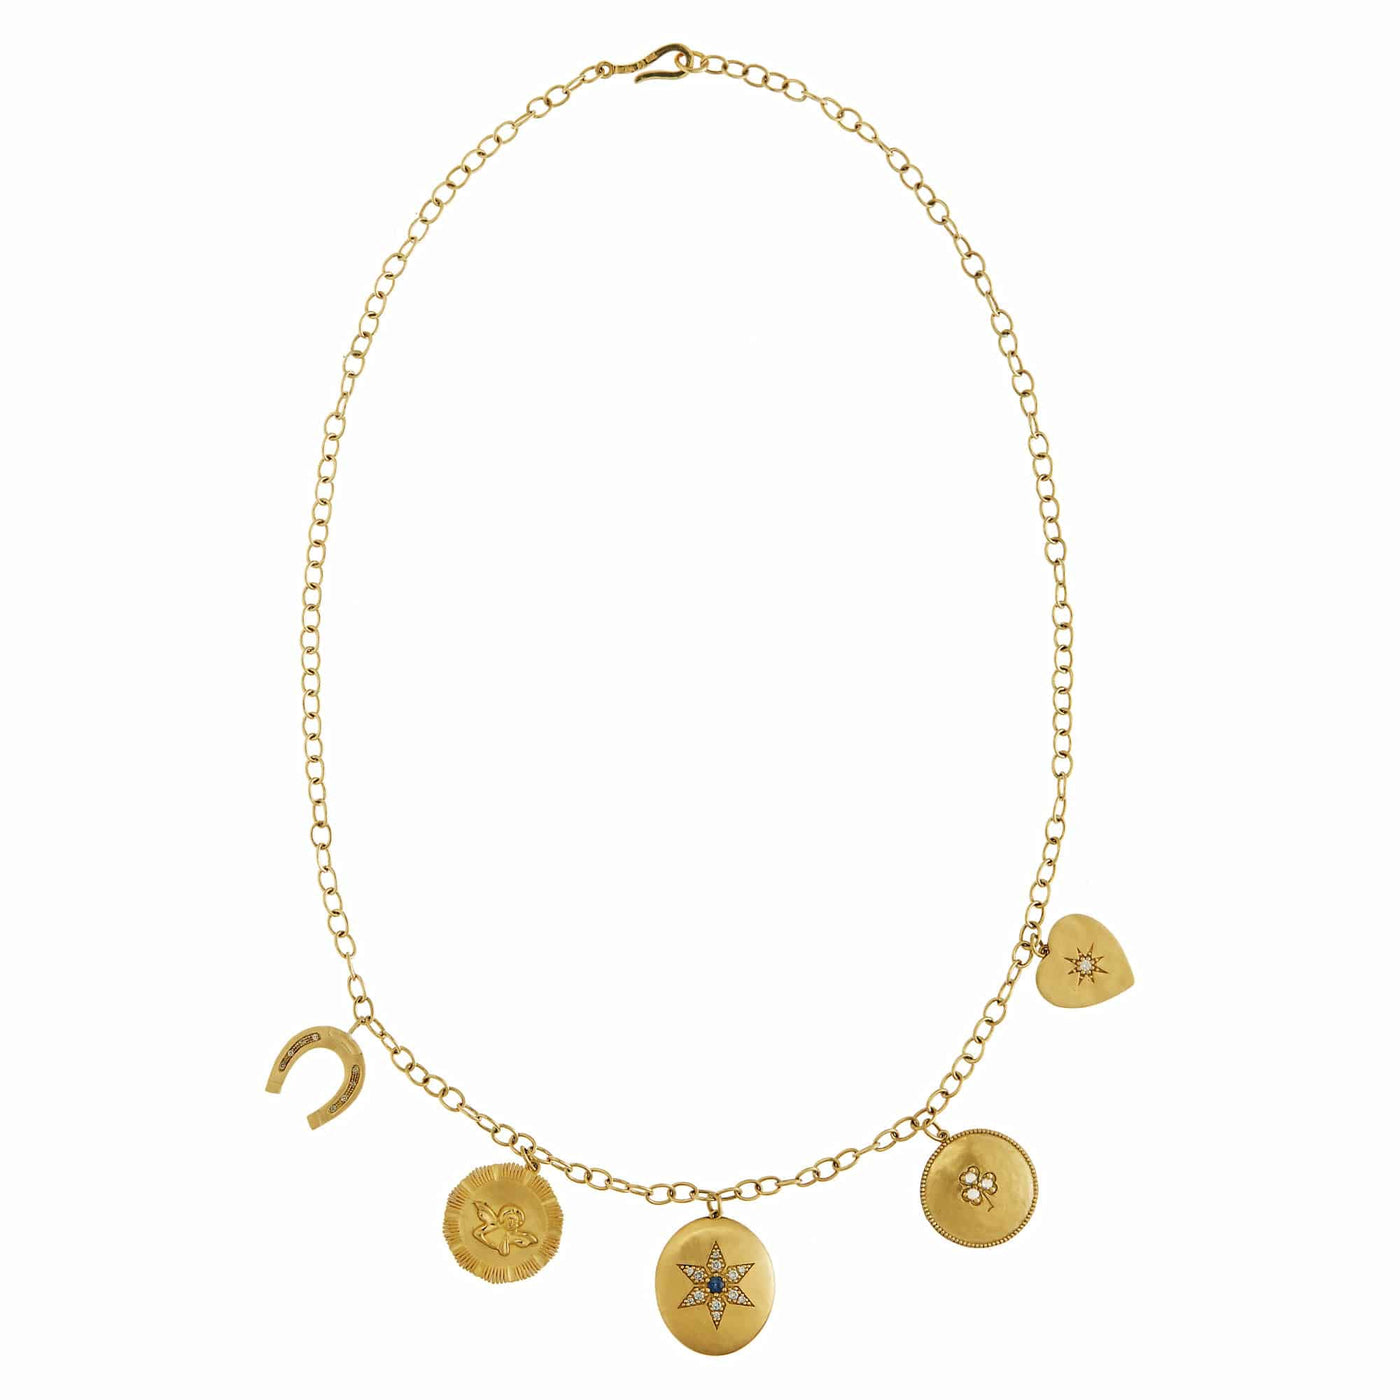 Fortune Charm Necklace - Globetrotter - Ileana Makri store